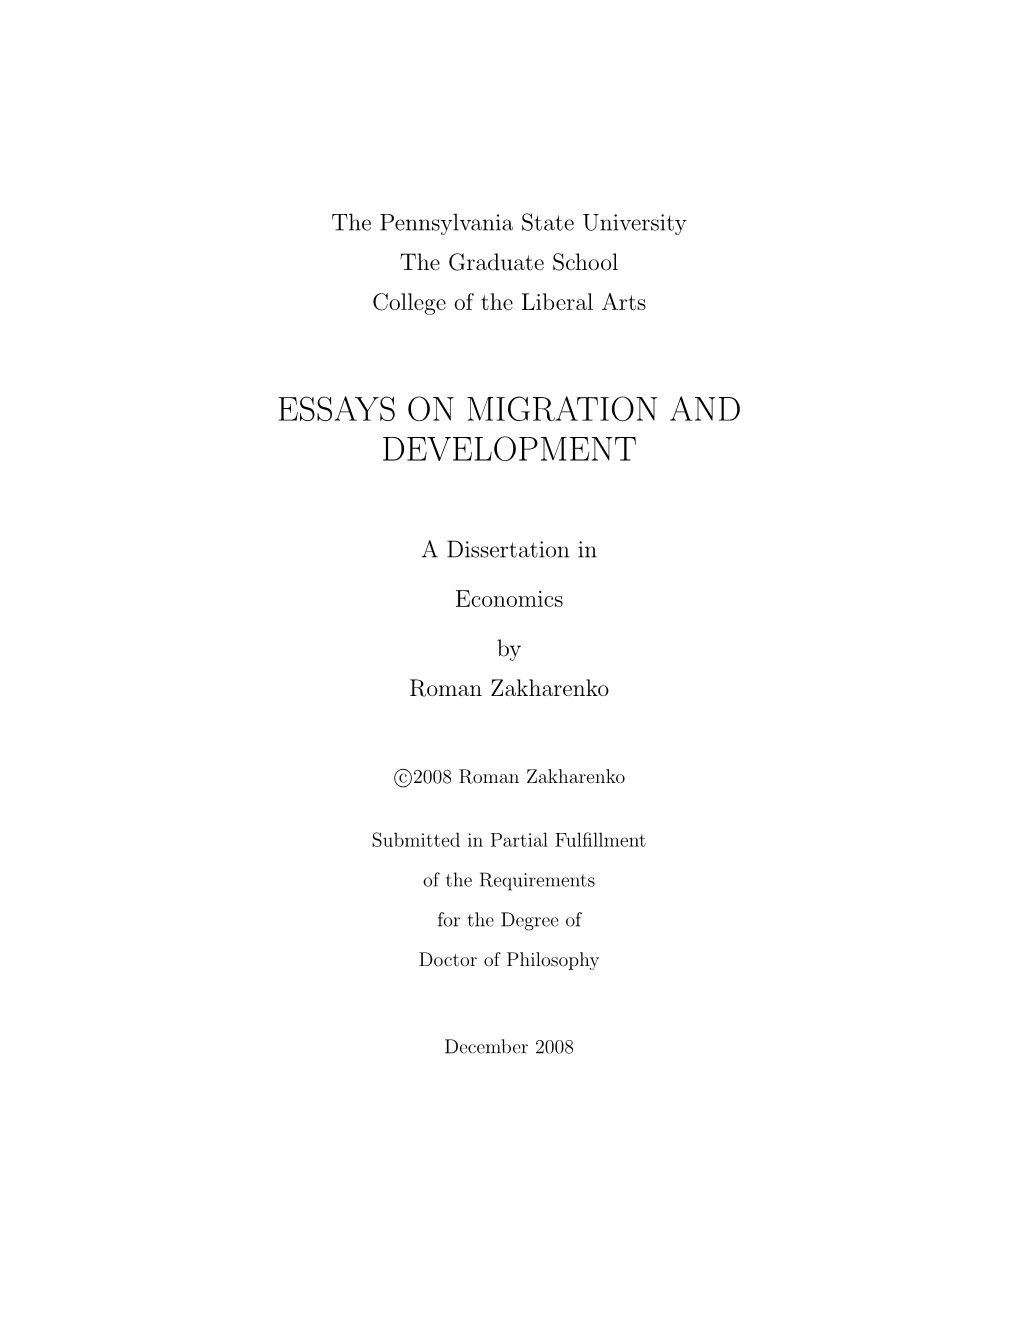 Essays on Migration and Development